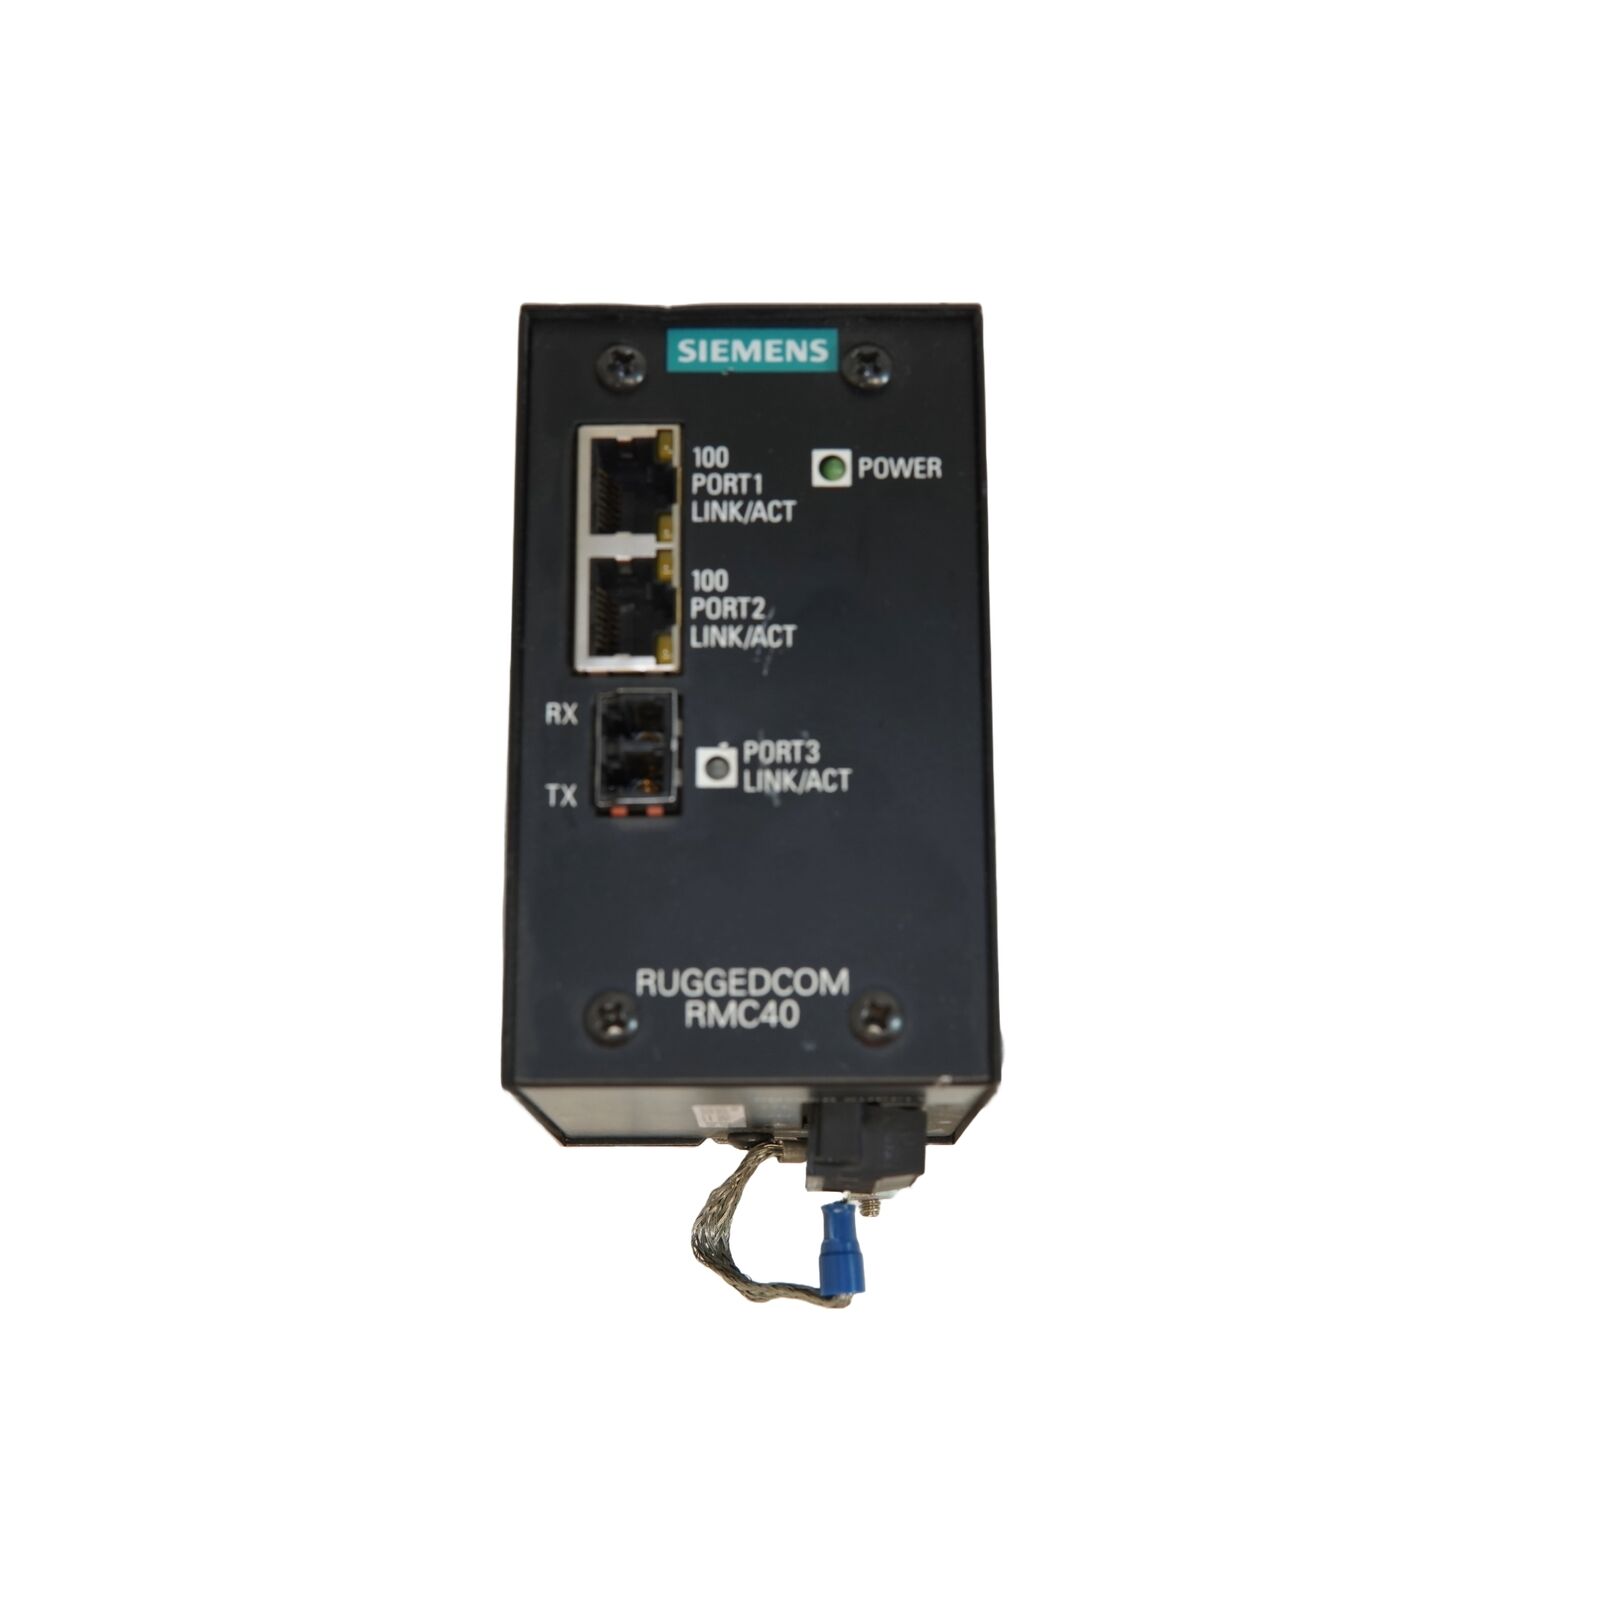 Siemens RuggedCOM RMC40 2-Port Fast Ethernet DIN Rail Switch RMC40-HI-ML00-XX